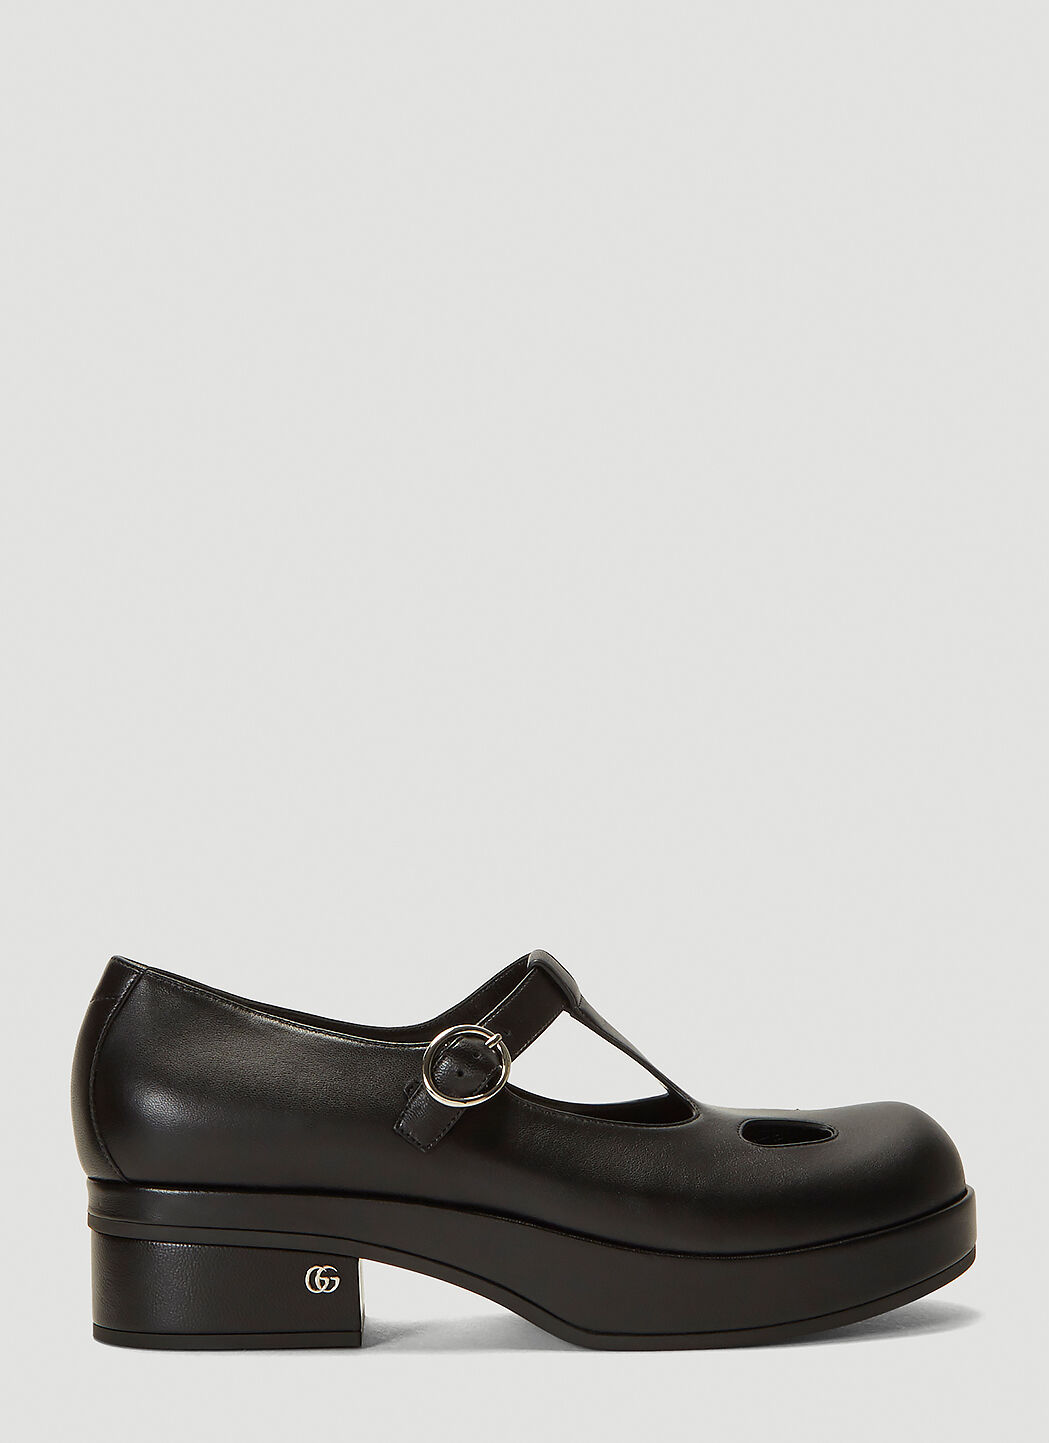 Saint Laurent Mary Jane Shoes Black sla0231015